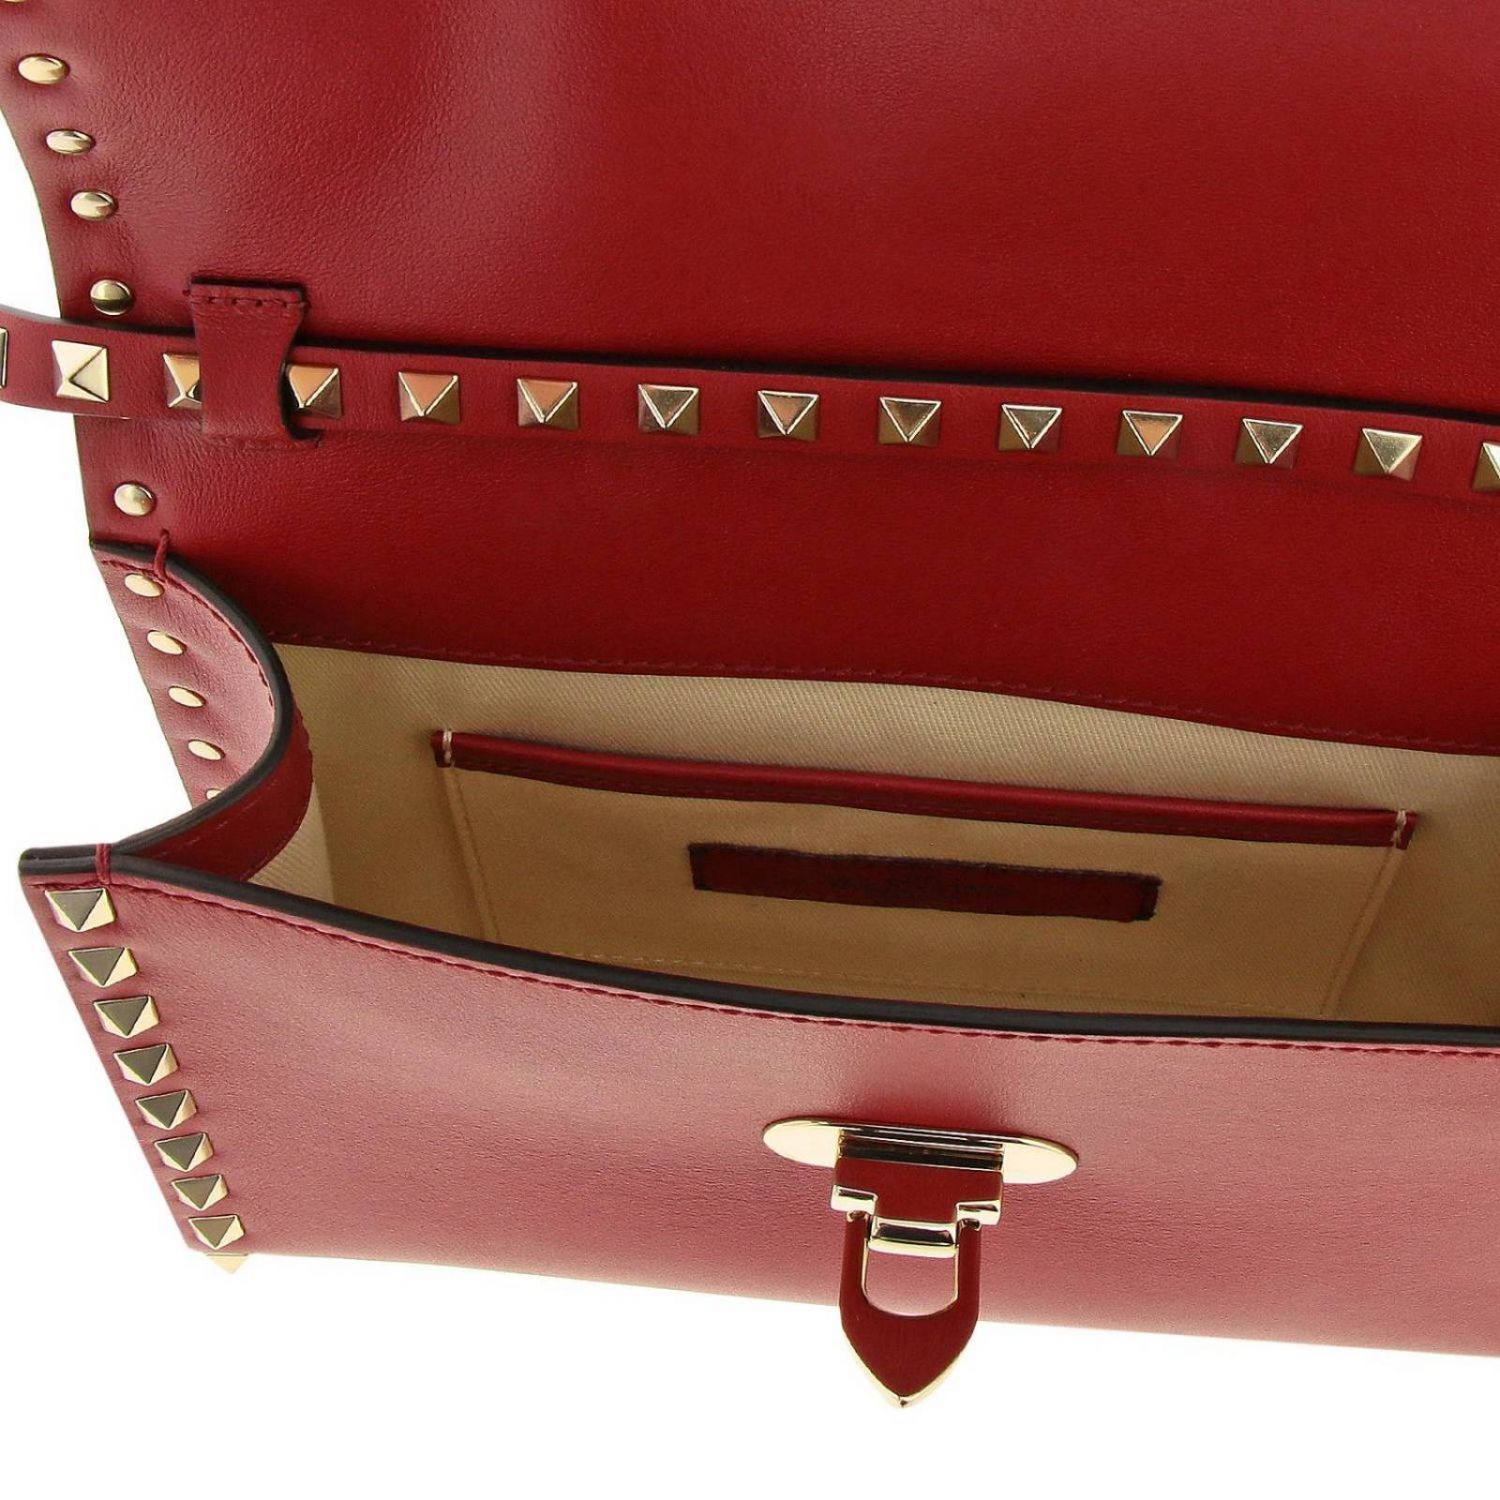 VALENTINO GARAVANI: Rockstud bag in genuine leather with metal hook and